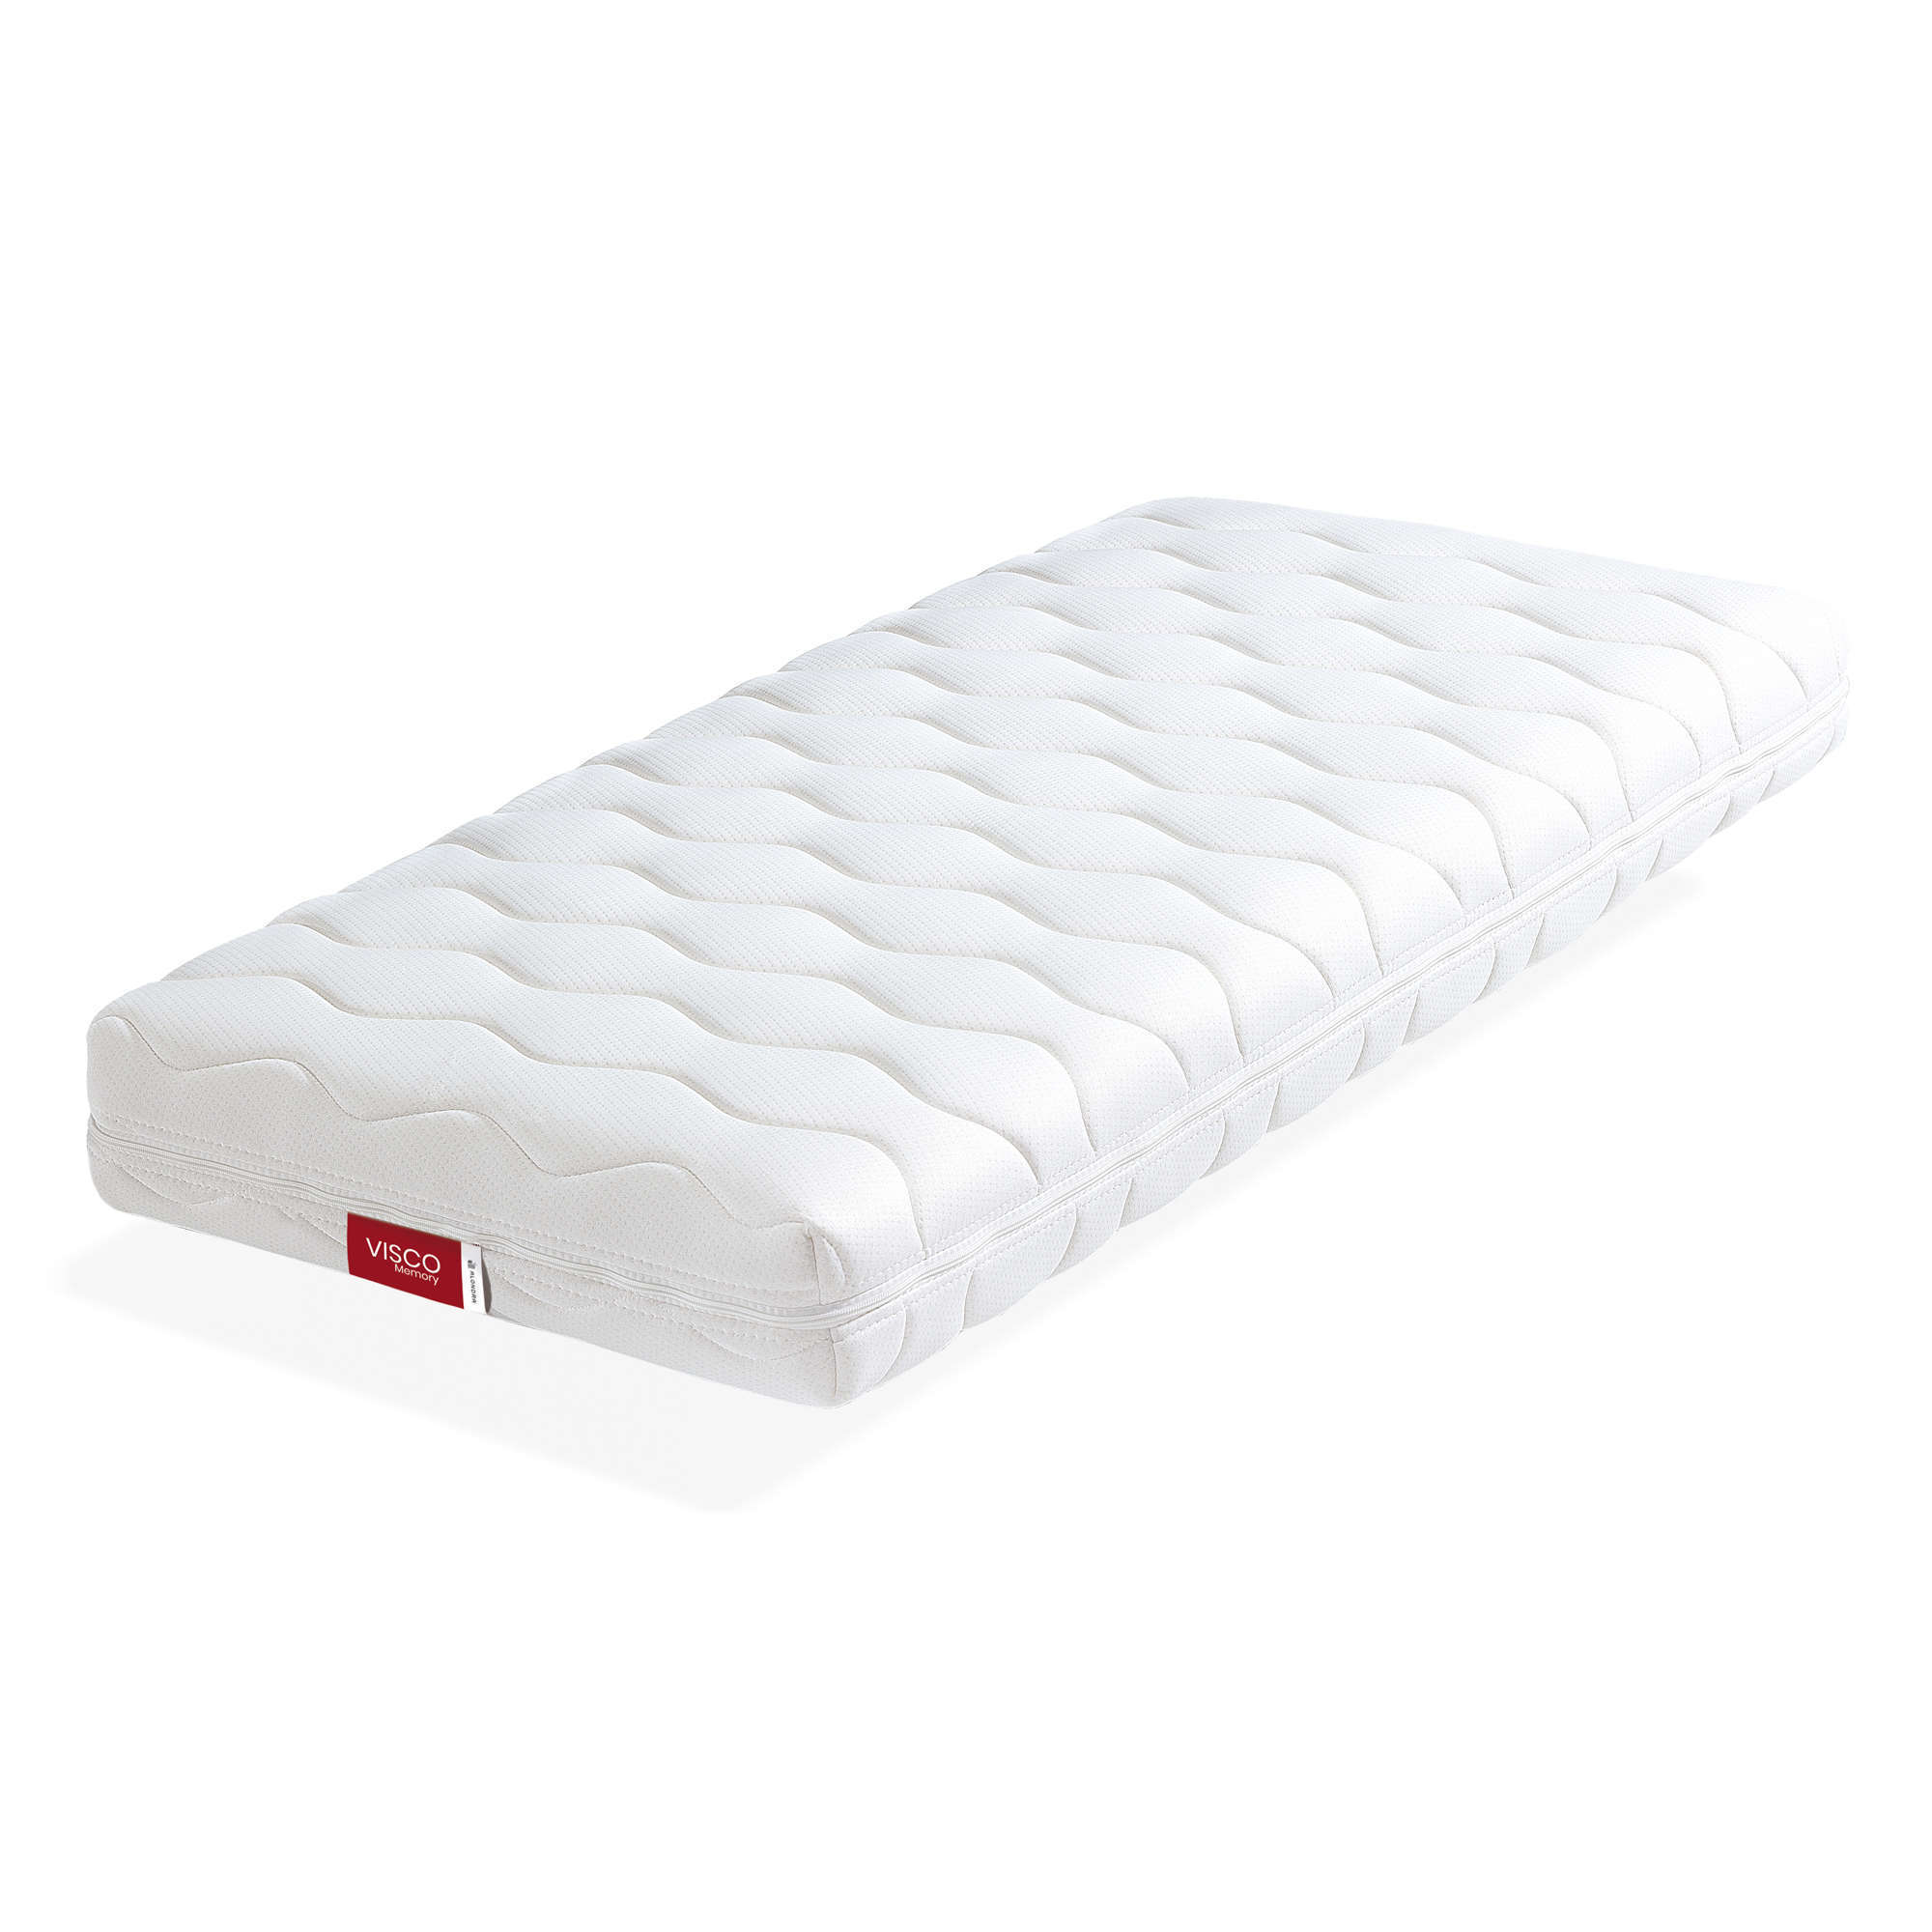 Convertible crib mattresses